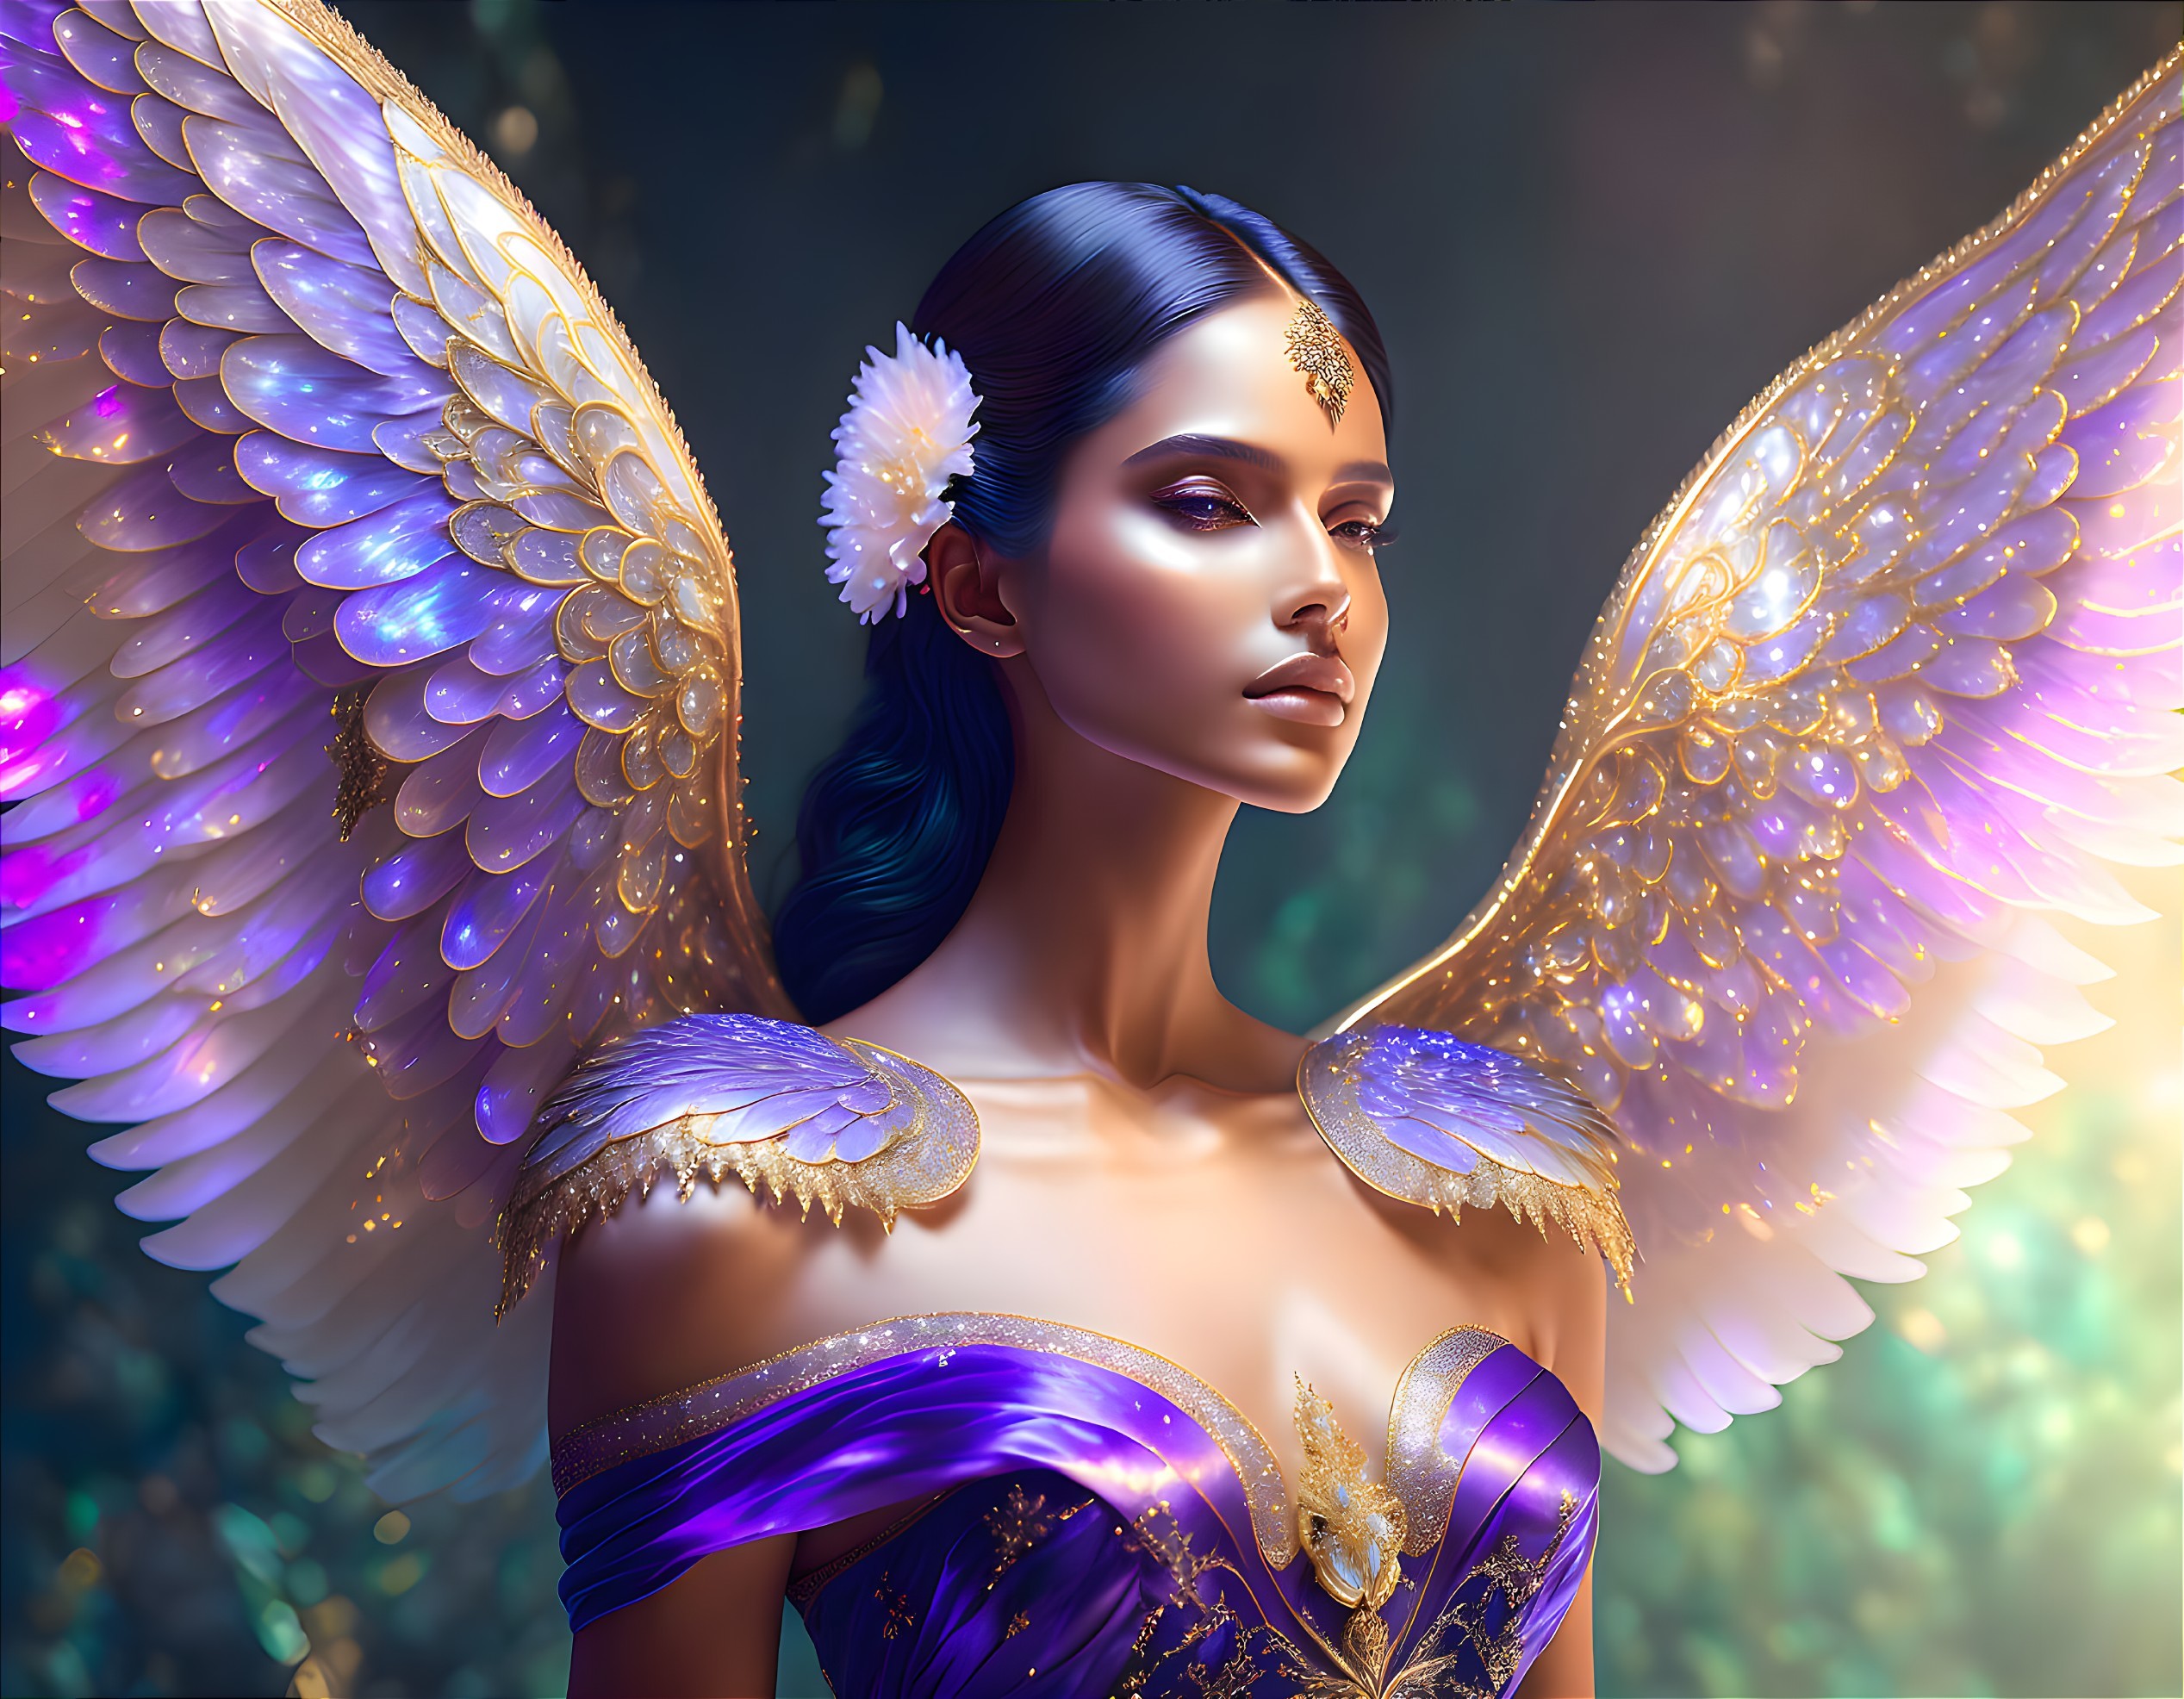 Exquisitely beautiful angel in heavenly silks 